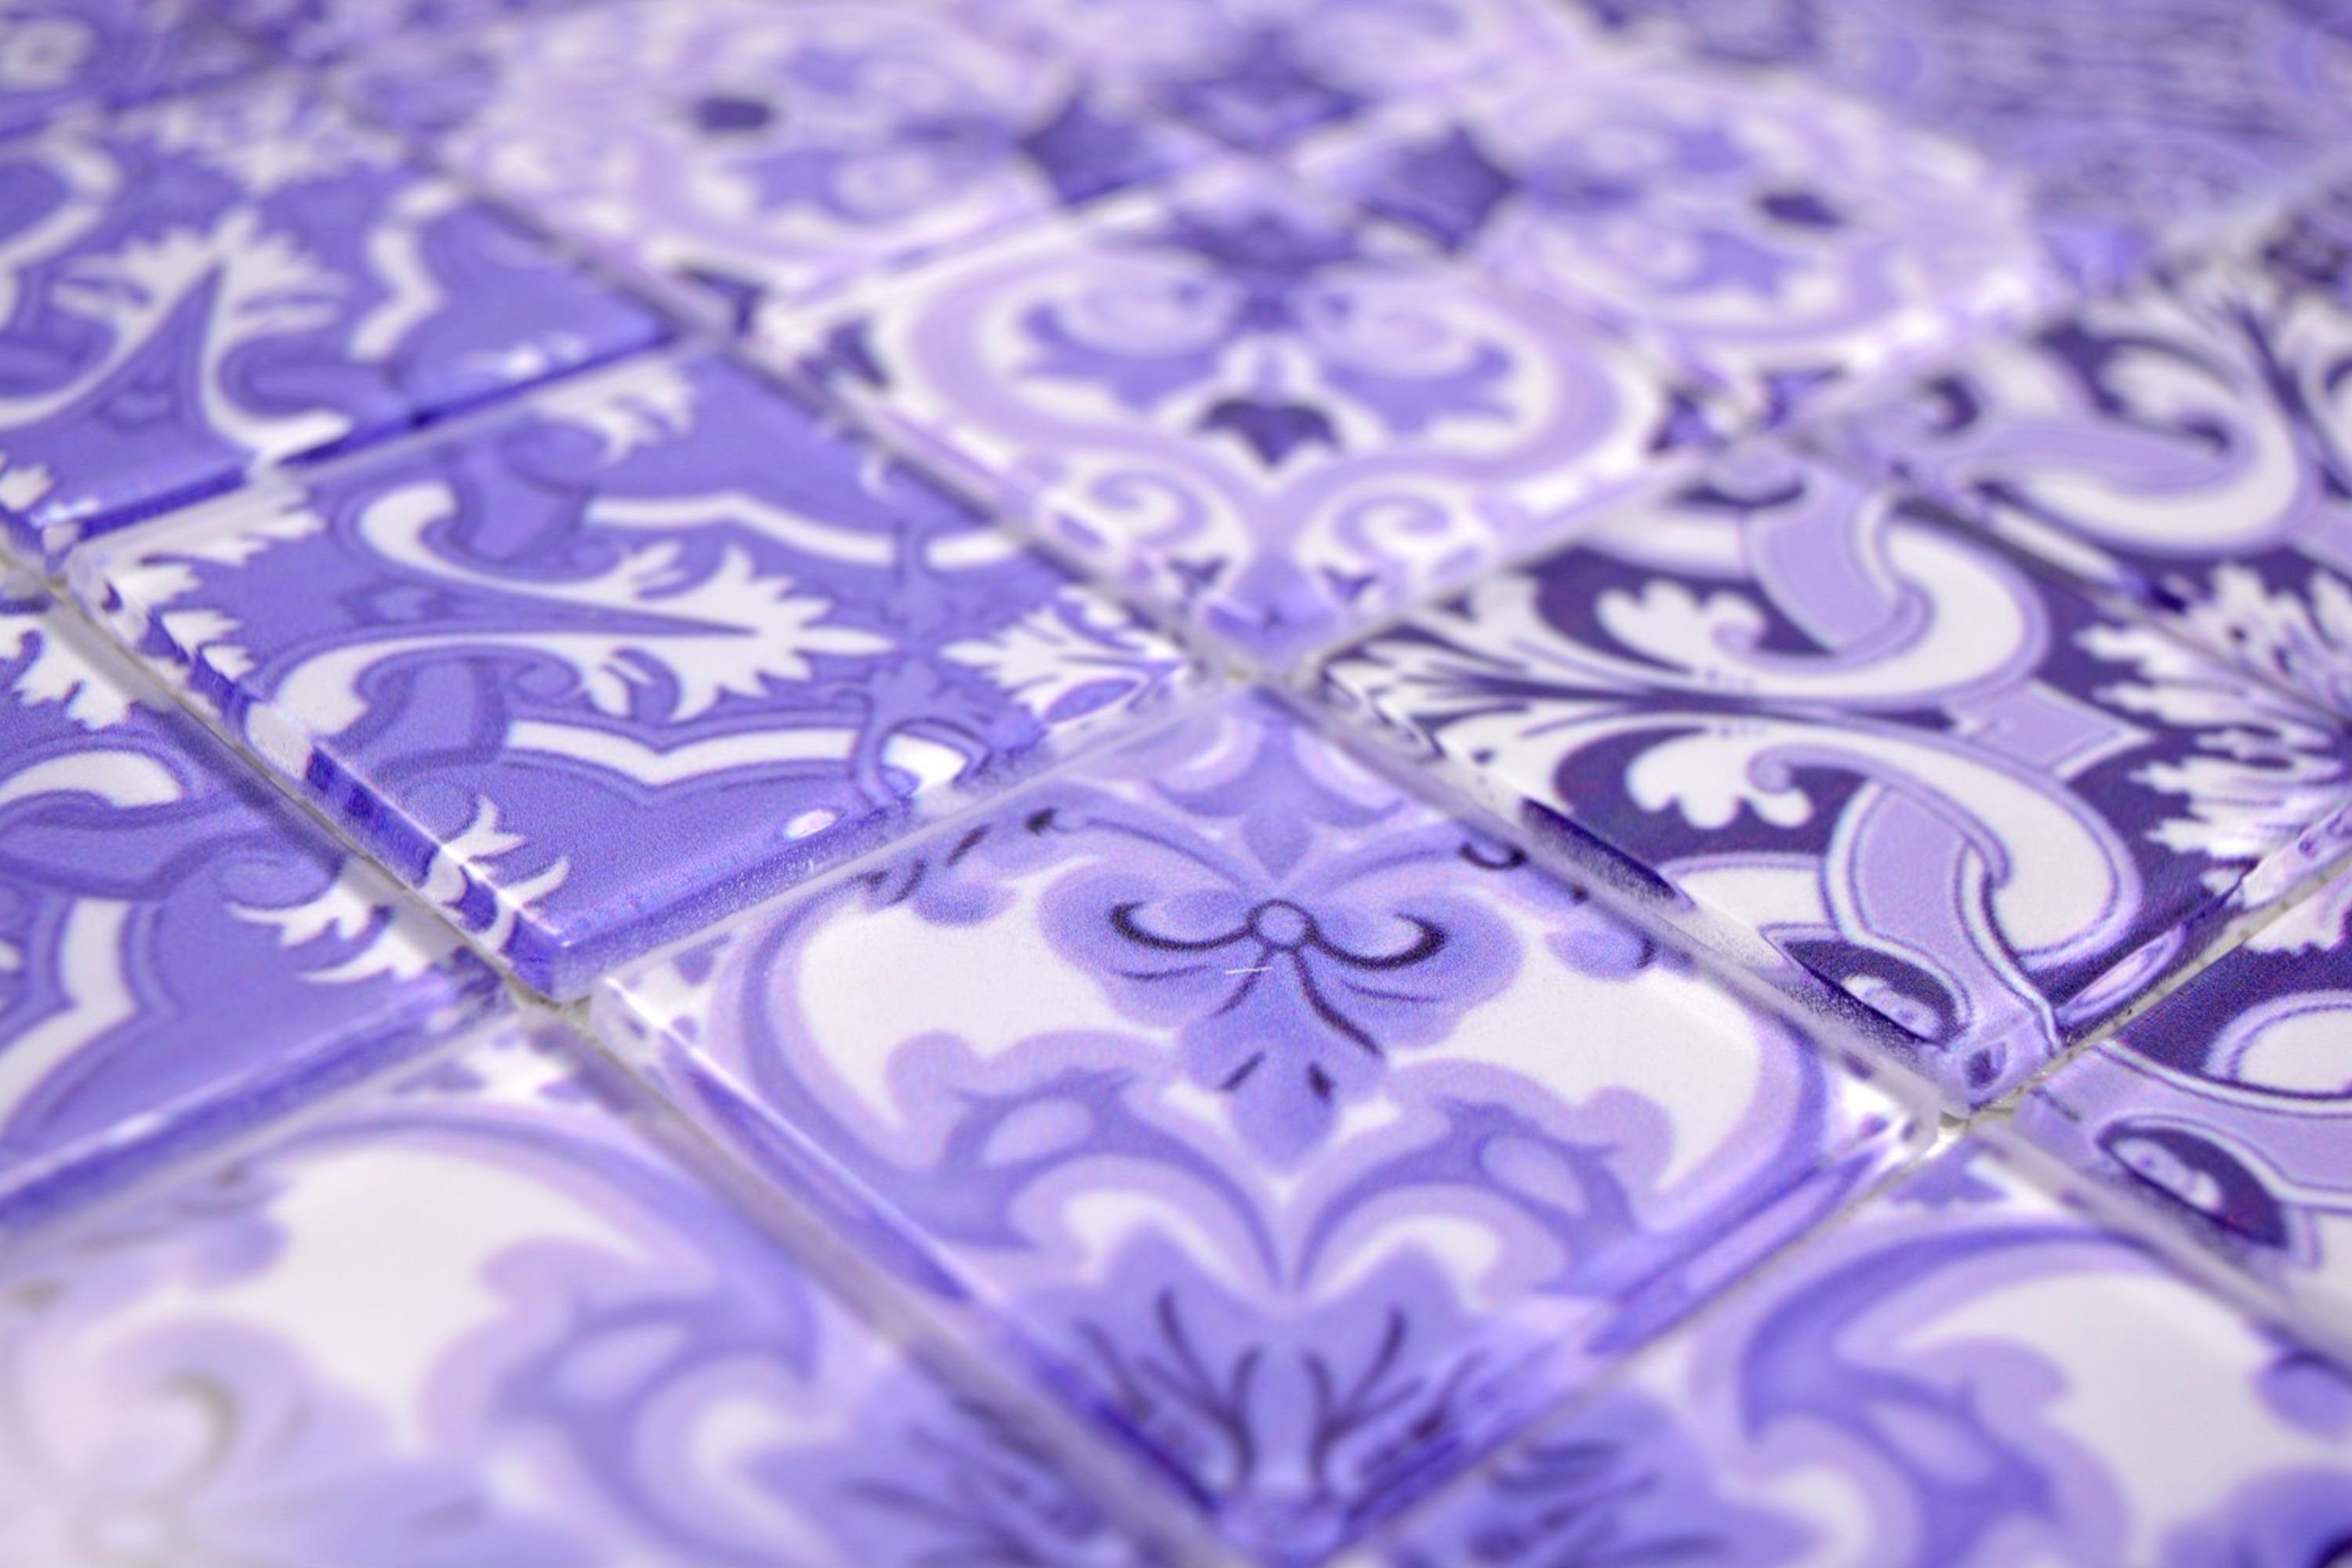 Mosani Wandfliese Vintage Glasmosaik Dekorative Mosaikfliesen lila violett, Retro Wandverkleidung